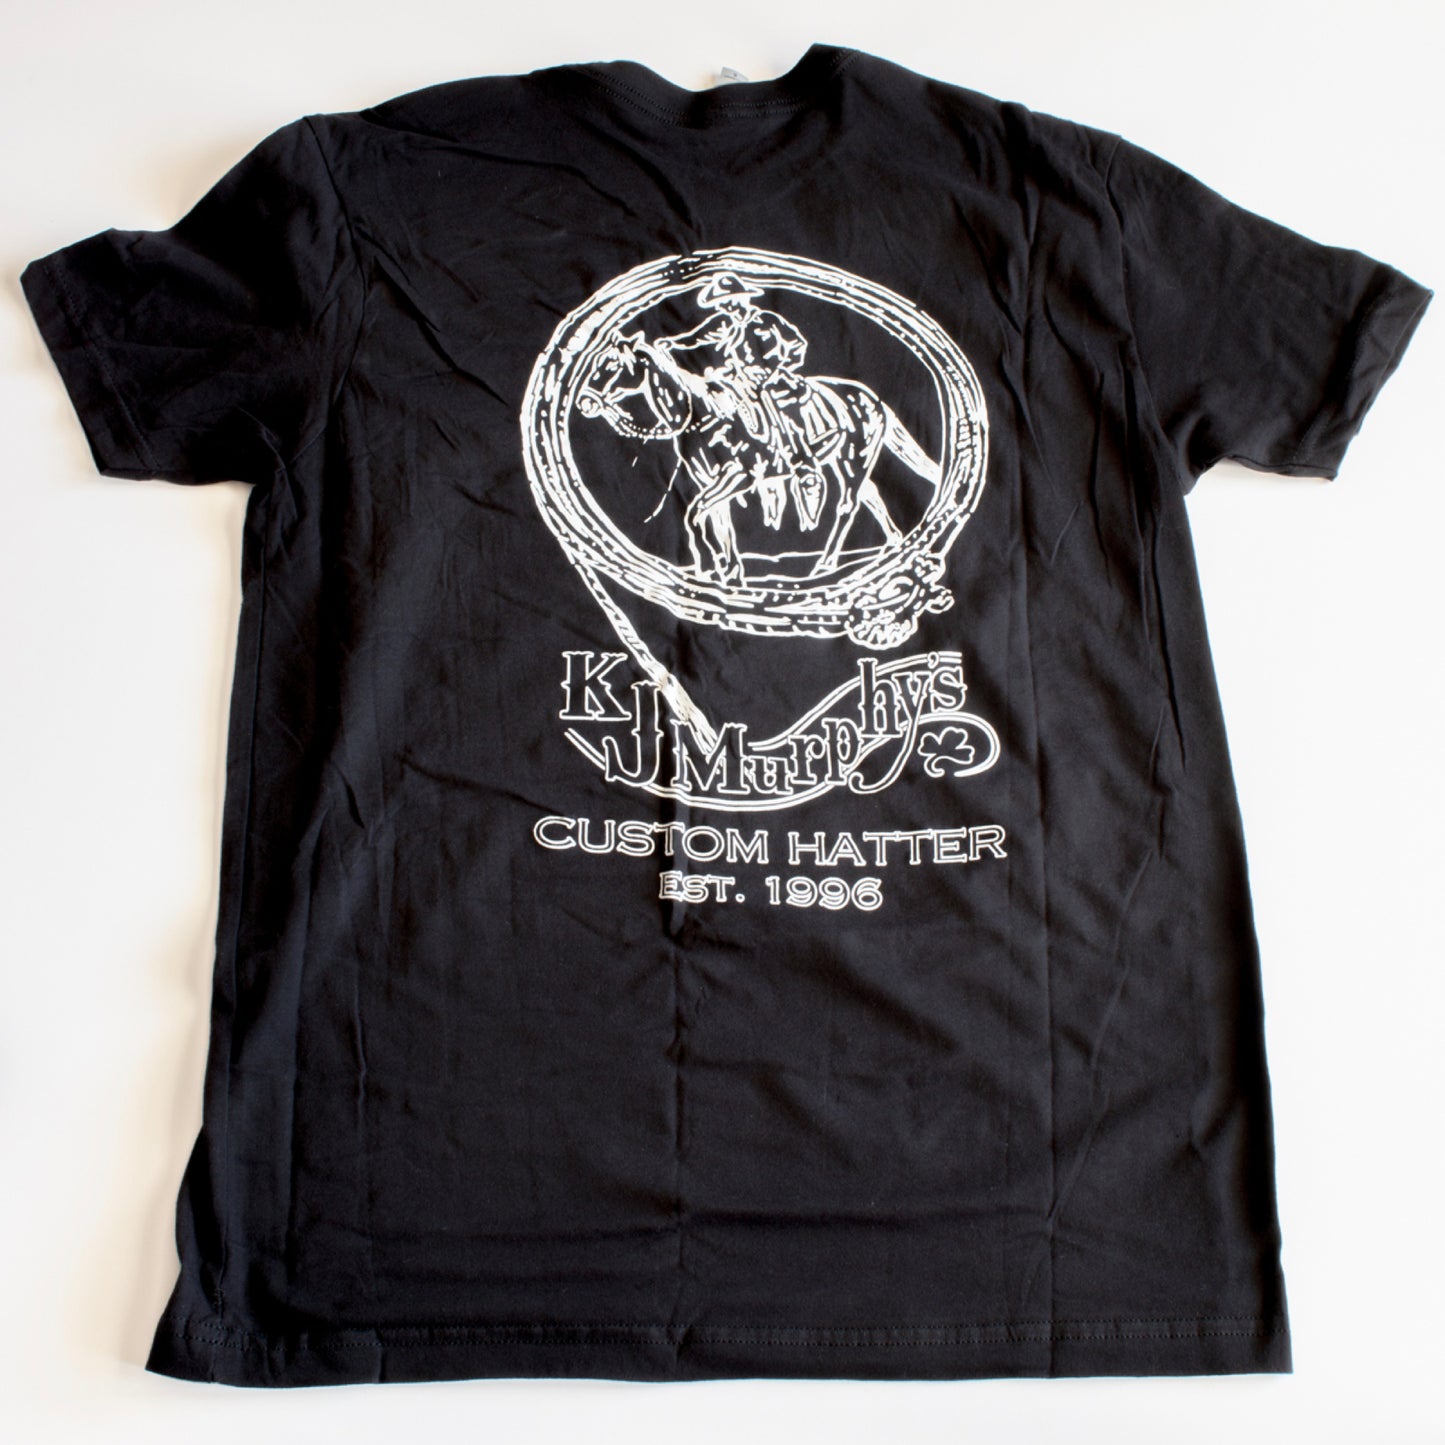 KJ Murphy T-Shirt - Black